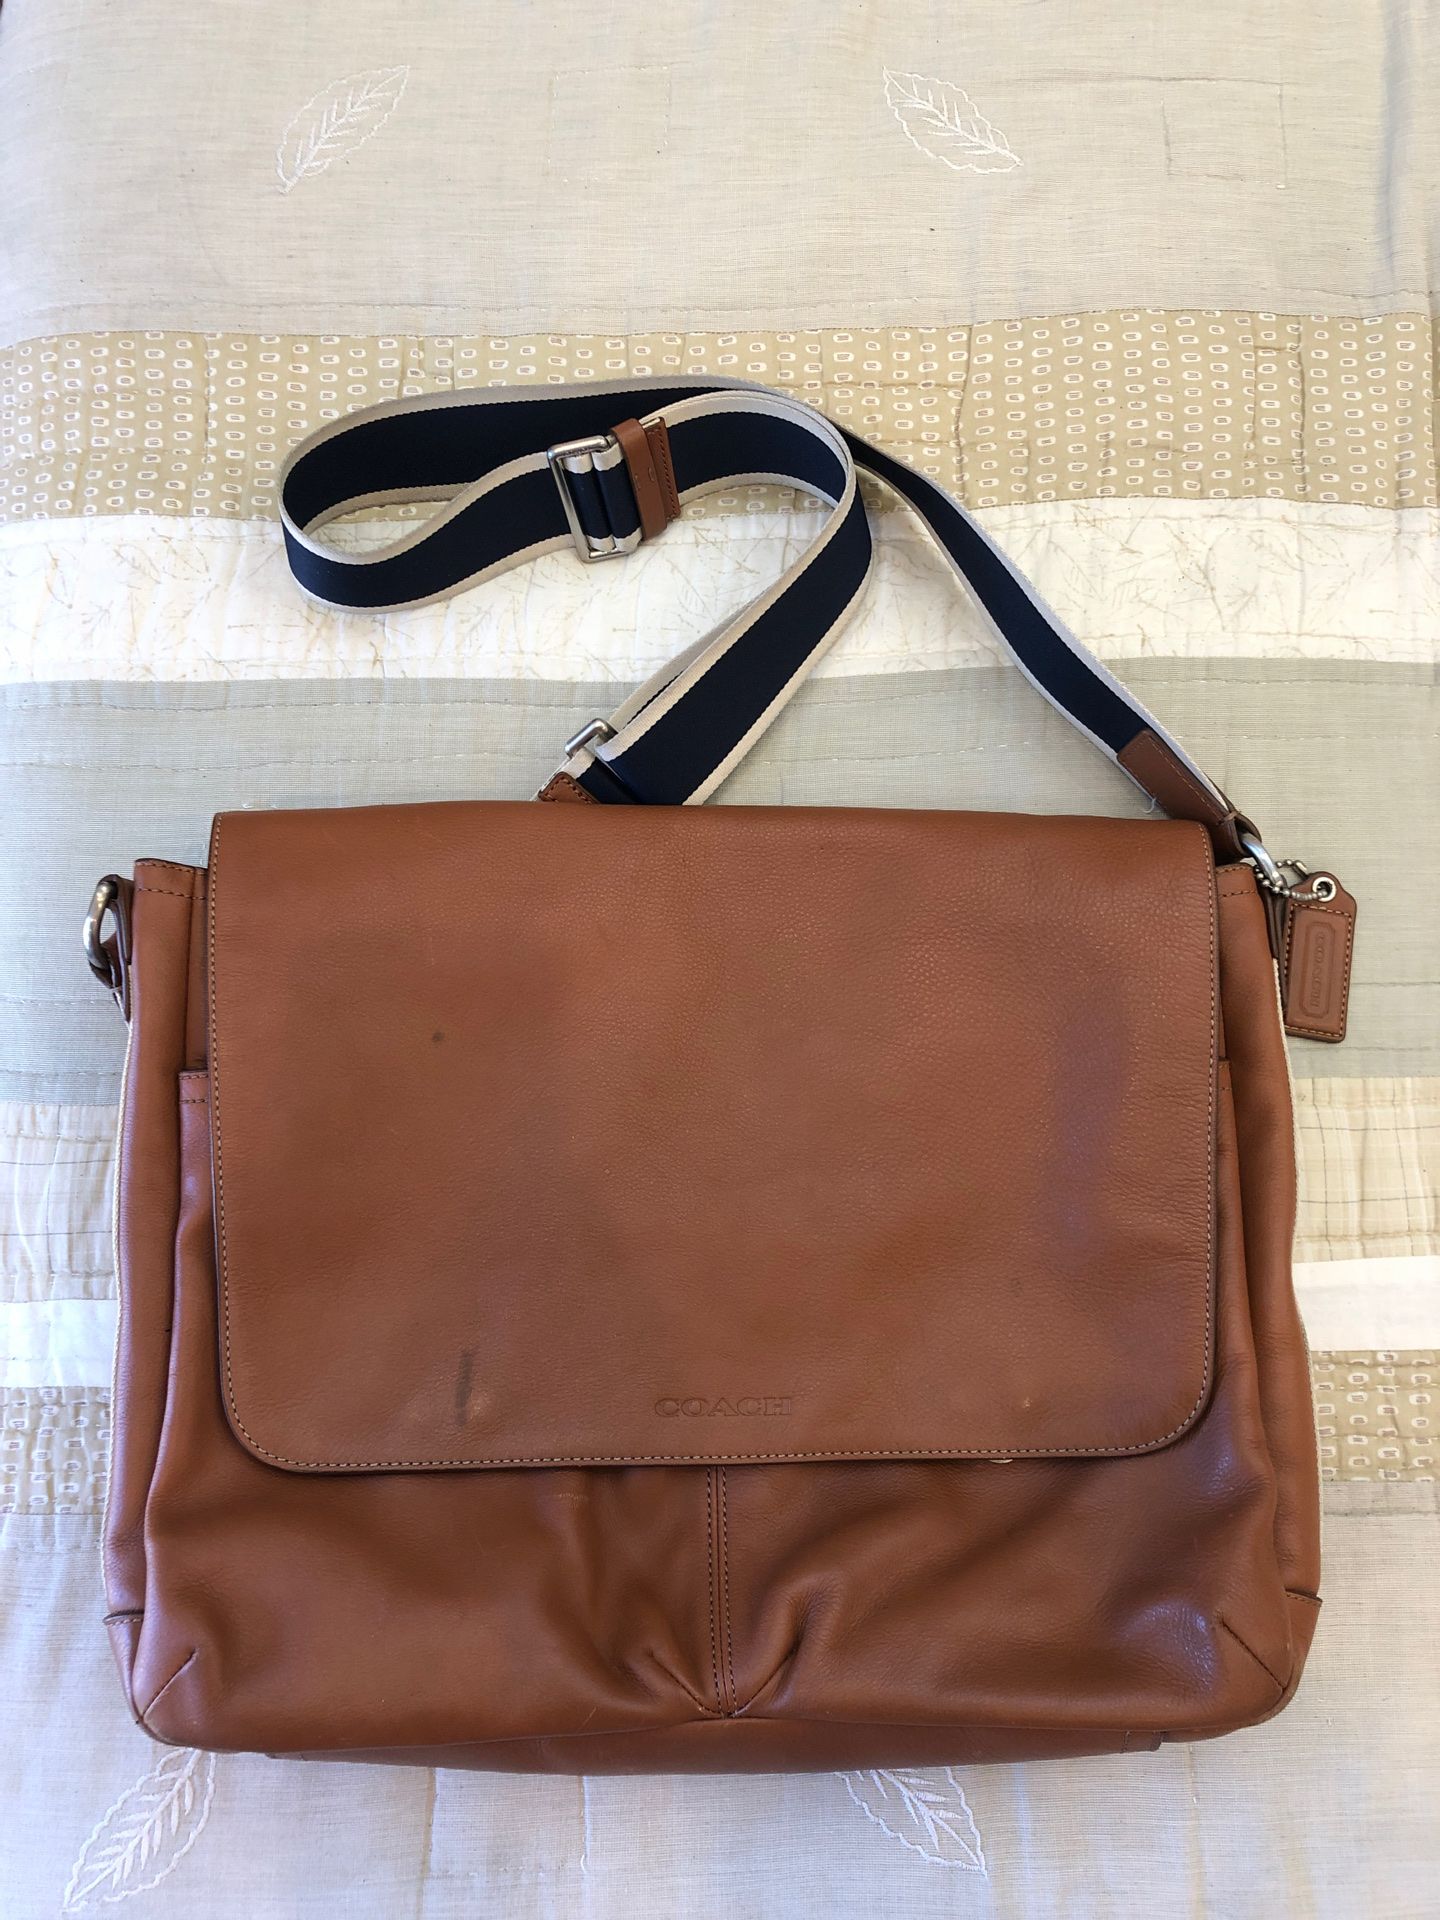 COACH- Metropolitan Messenger/ Shoulder Bag, Retails $395